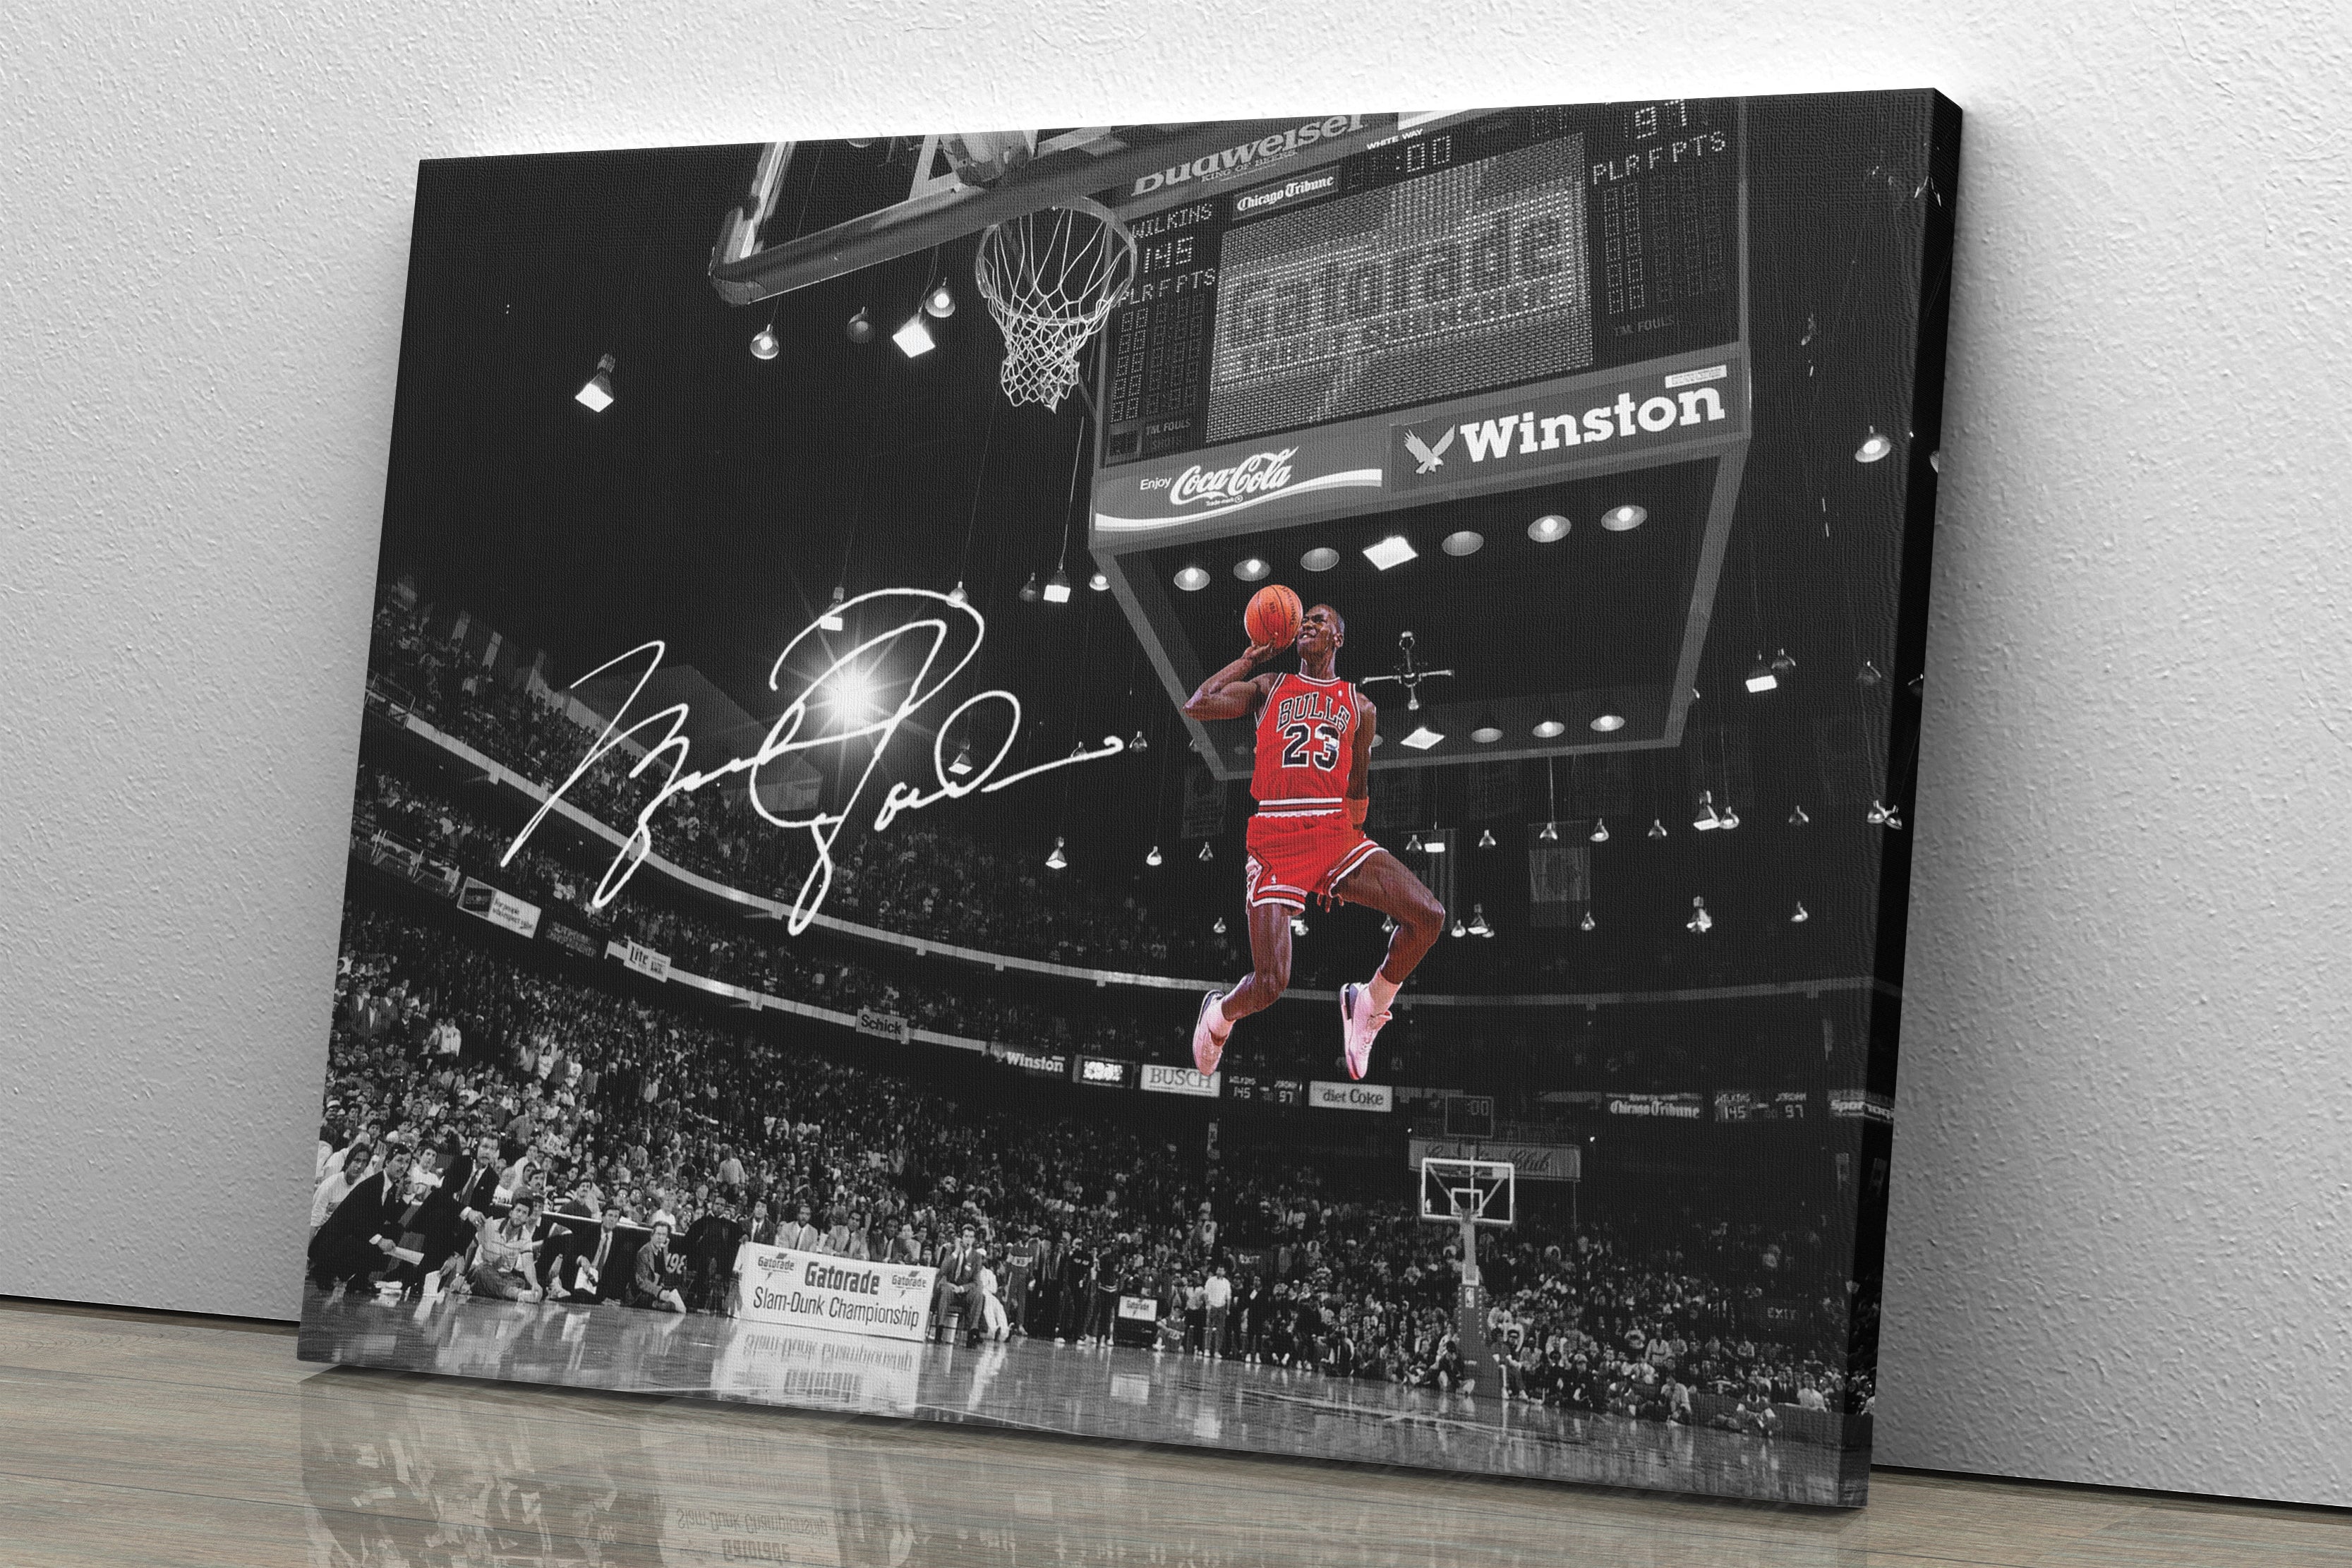 Number 23 Michael Jordan Chicago Bulls Basketball Art Print Poster